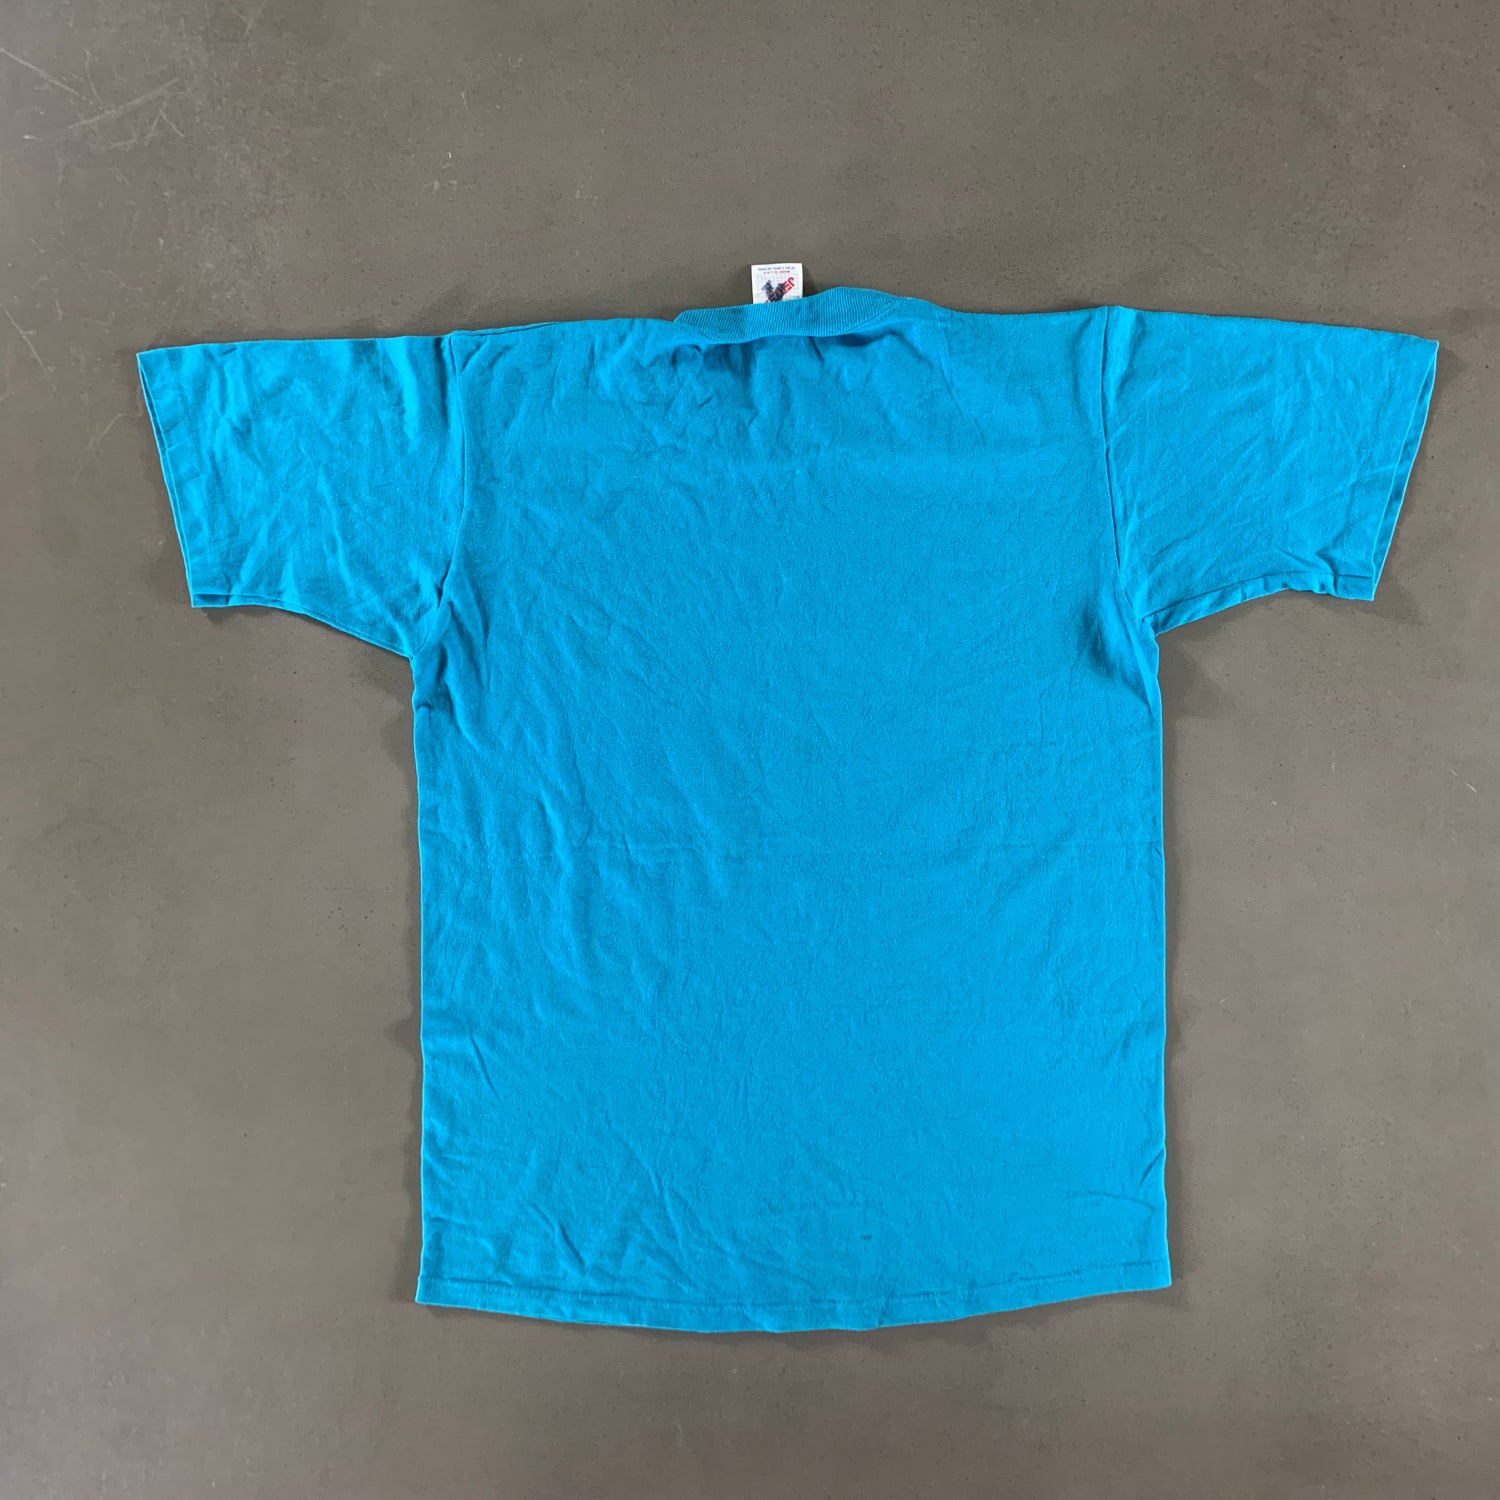 Vintage 1991 Drake University T-shirt size Medium